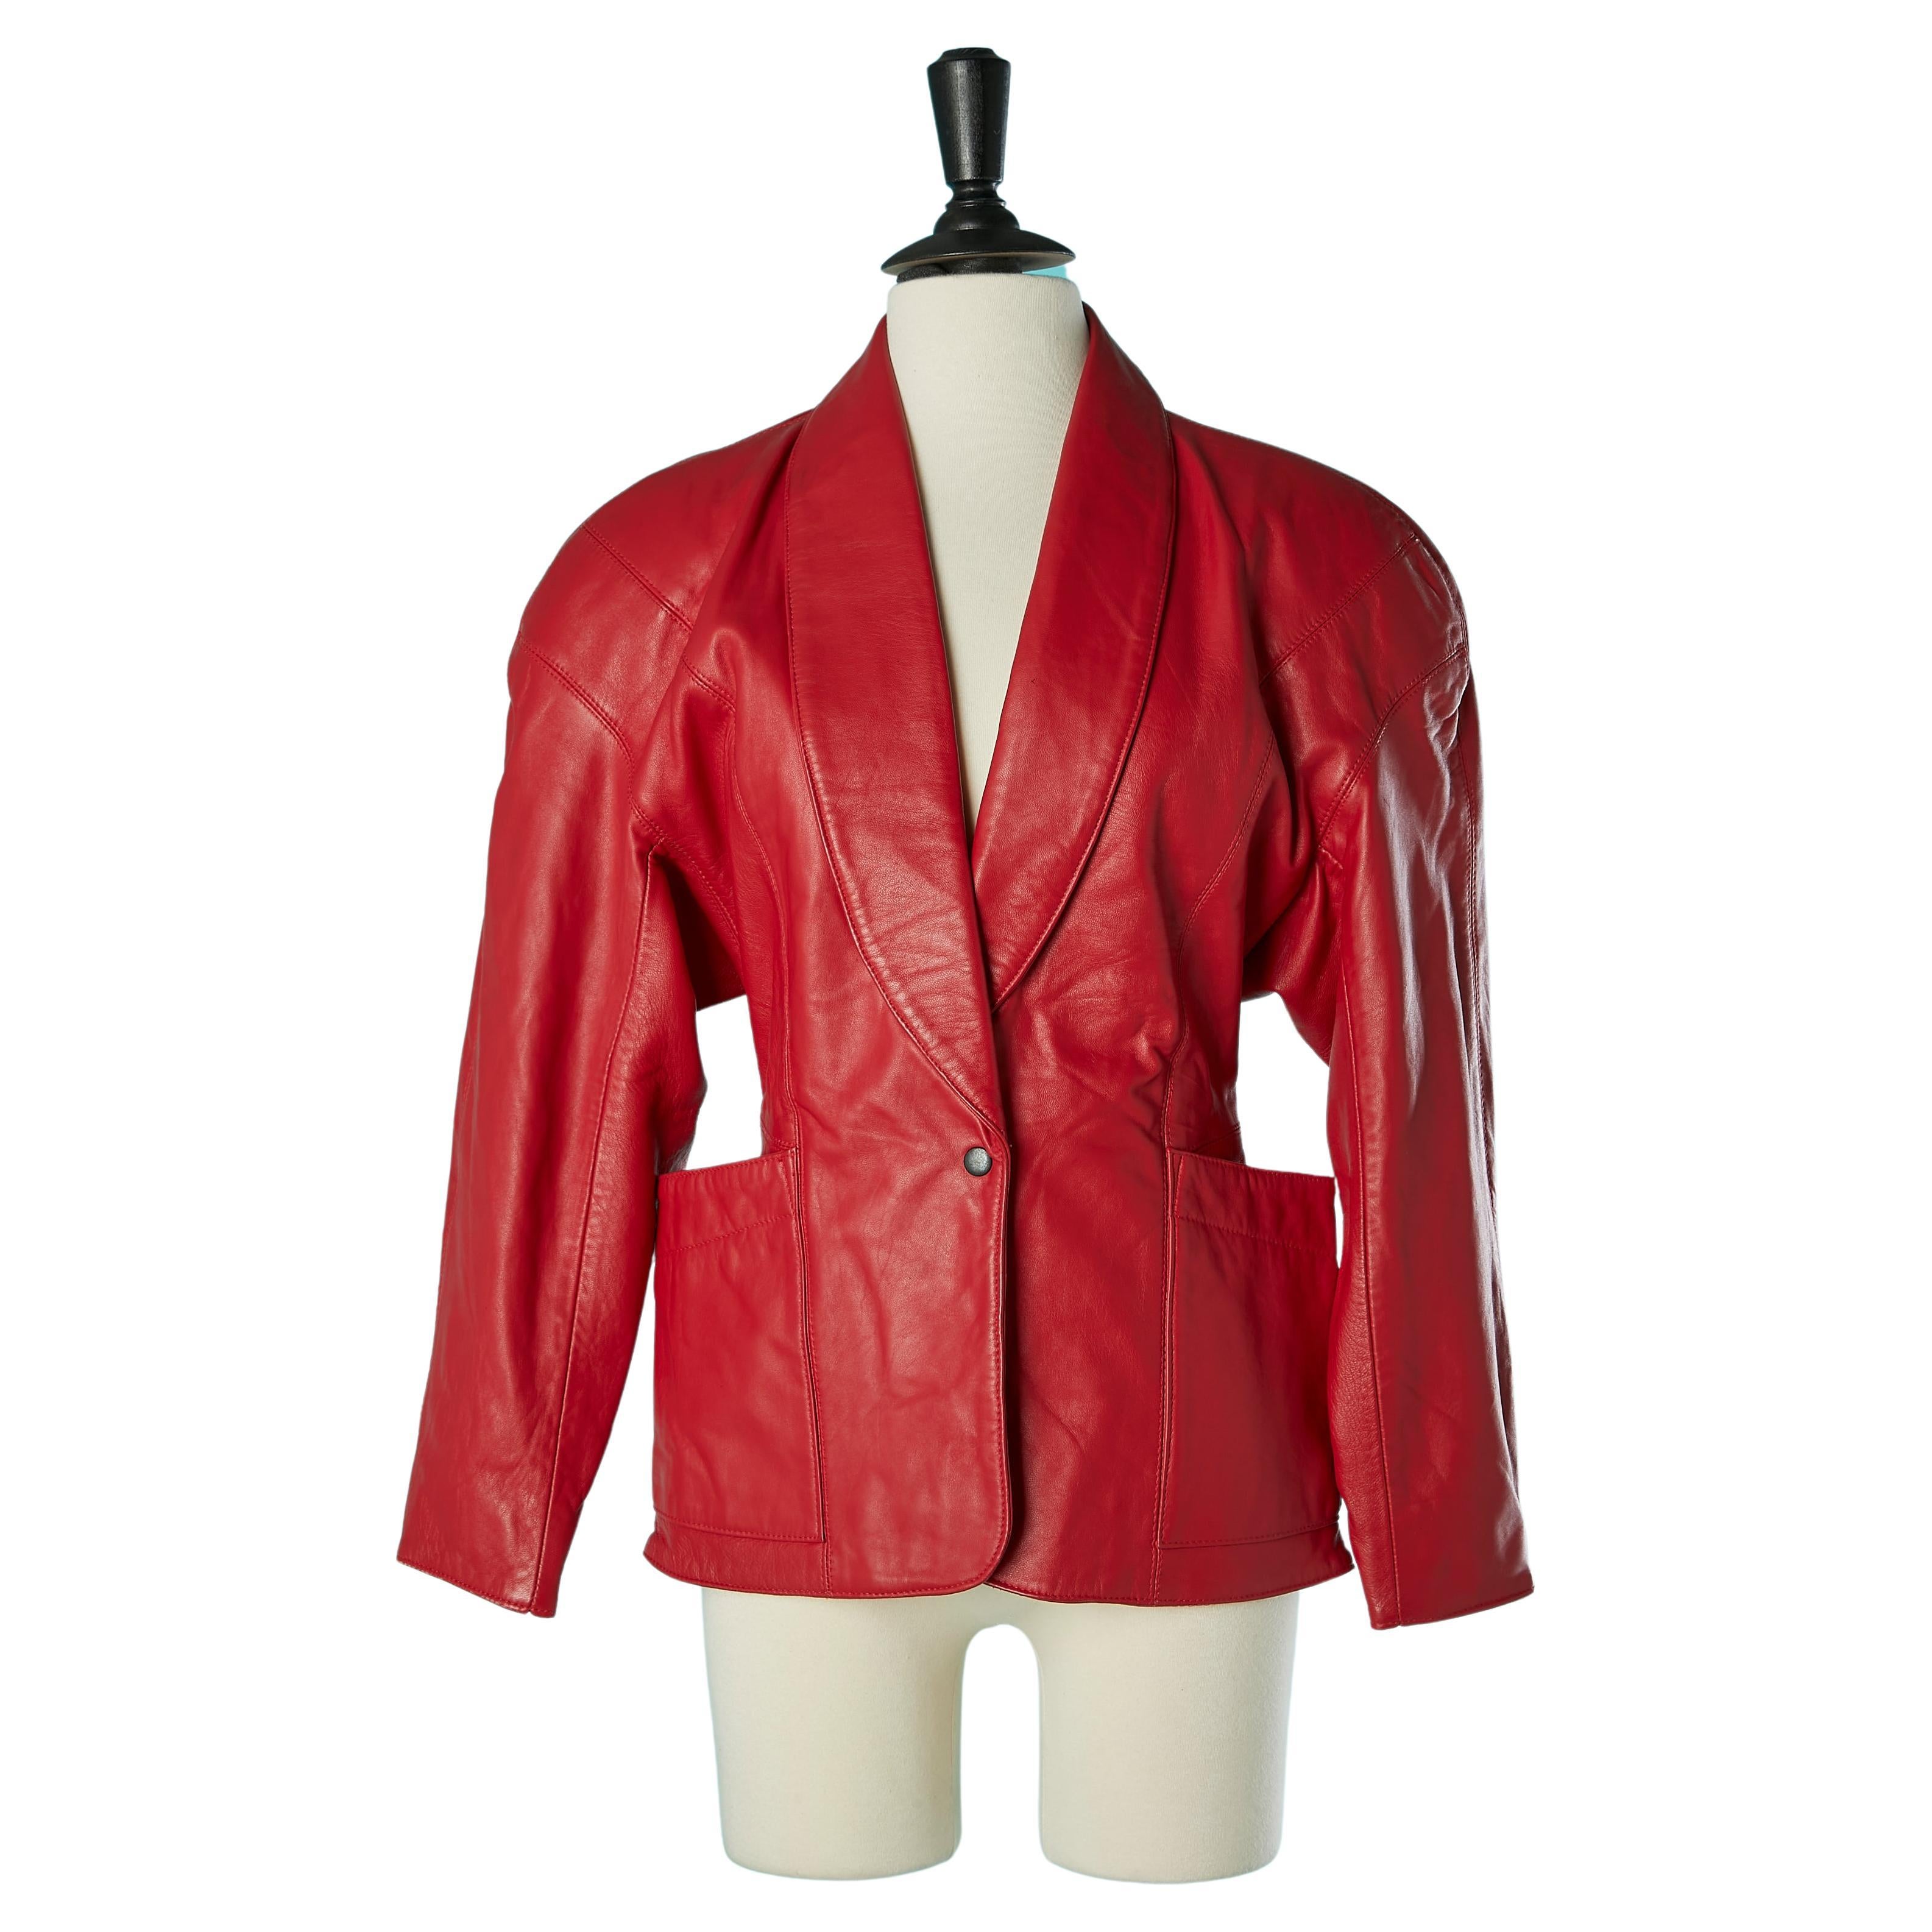 Rote einreihige Lederjacke Michael Hoban for North Beach Leather  im Angebot